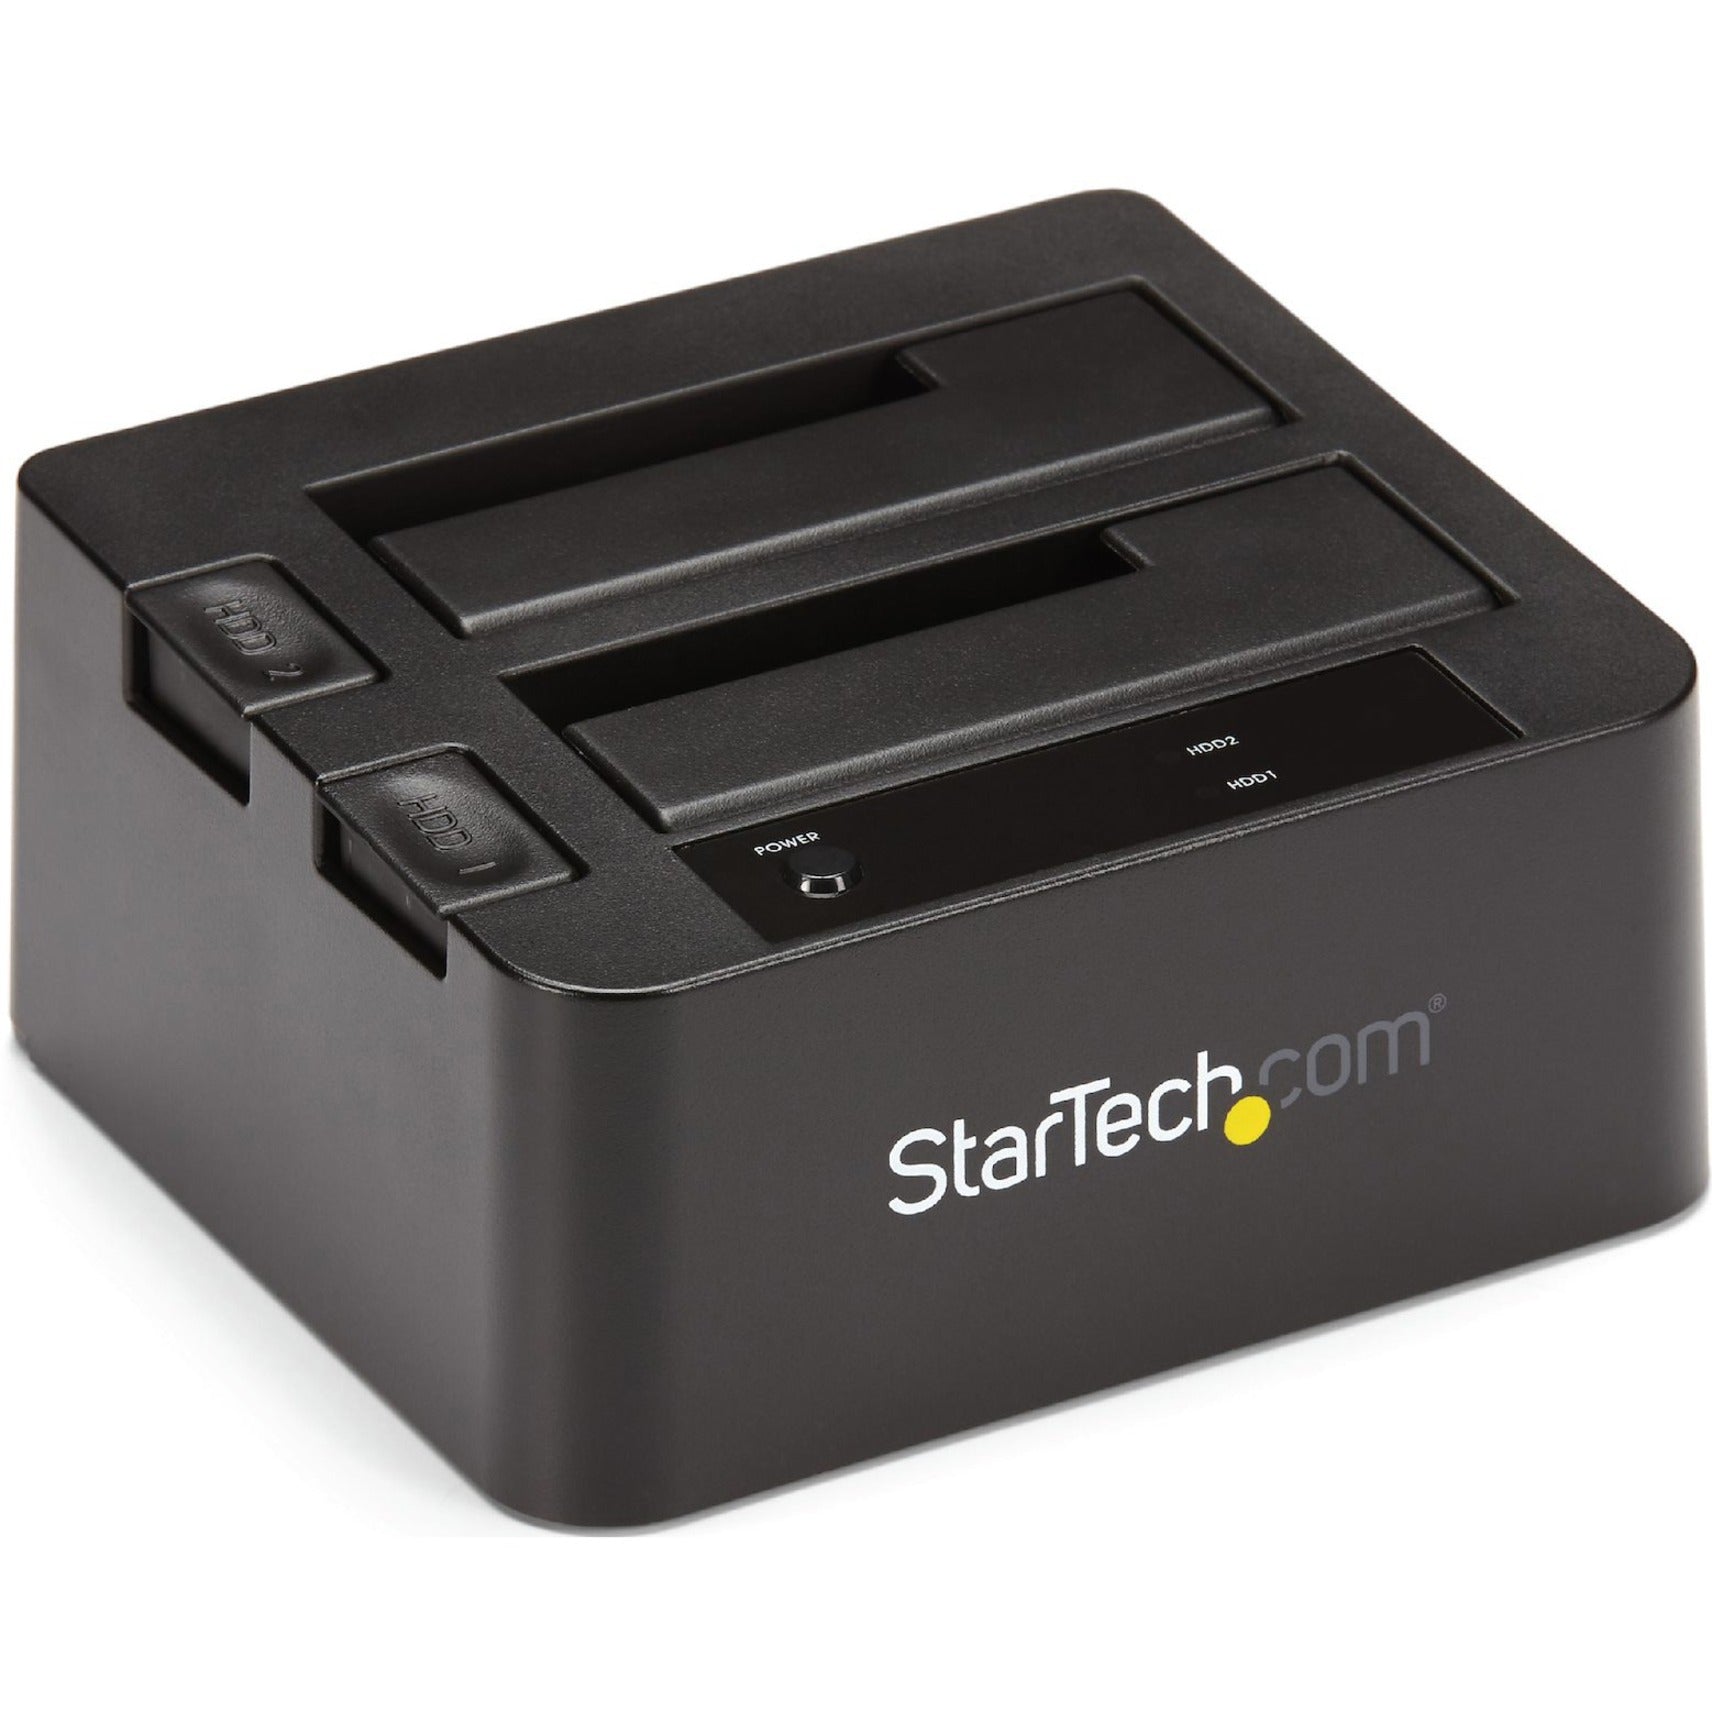 StarTech.com SDOCK2U313 USB 3.1 Gen 2 Dual-Bay Dock for 2.5"/3.5" SATA SSD/HDDs with UASP, 10Gbps Data Transfer Speed